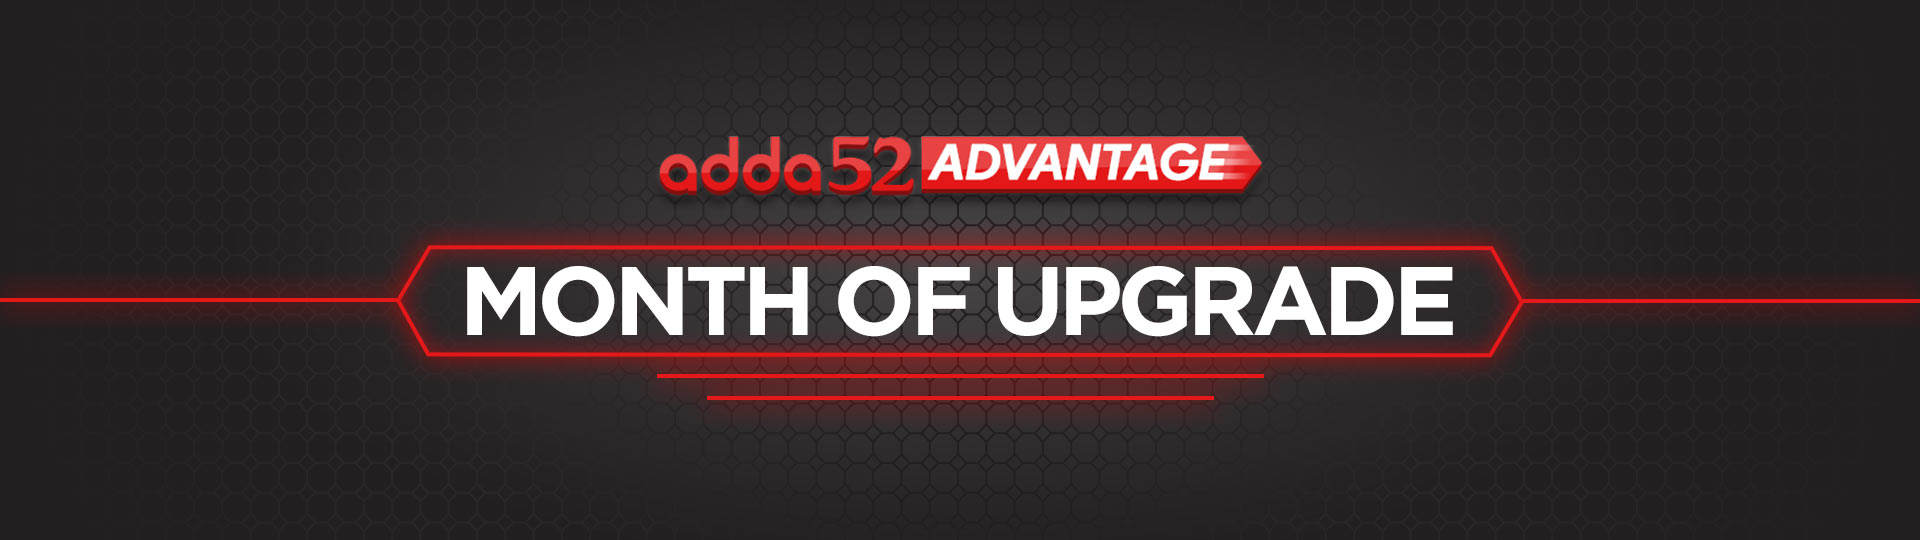 Adda52 Advantage - Month of Upgrade